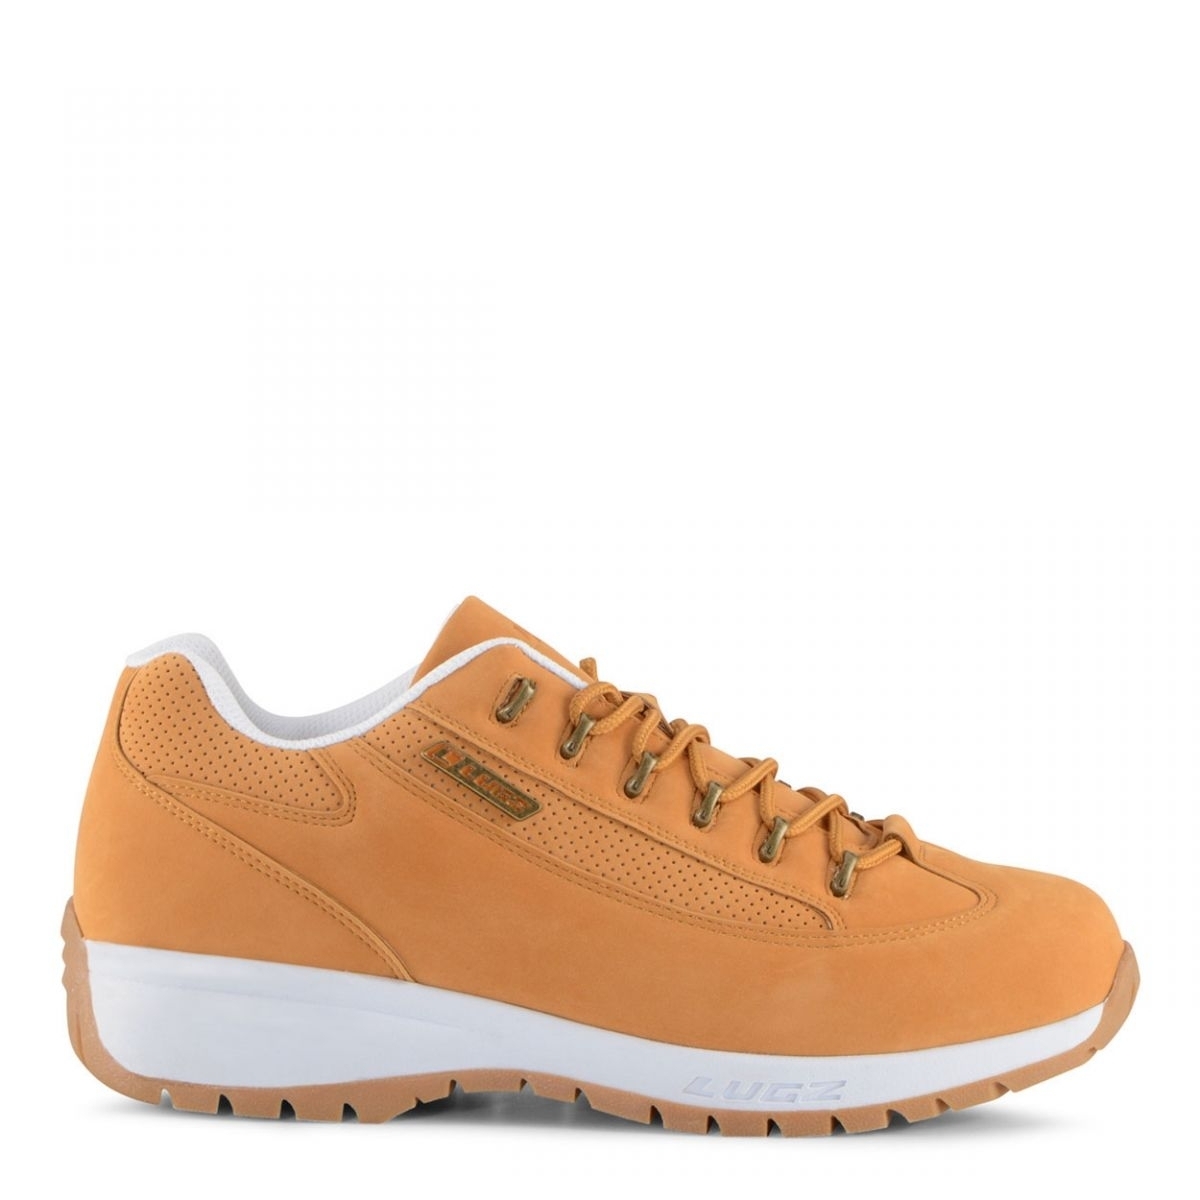 Lugz Men's Express Sneakers Golden Wheat/White - MEXPRSPK-714 Golden Wheat/White/Gum - Golden Wheat/White/Gum, 12